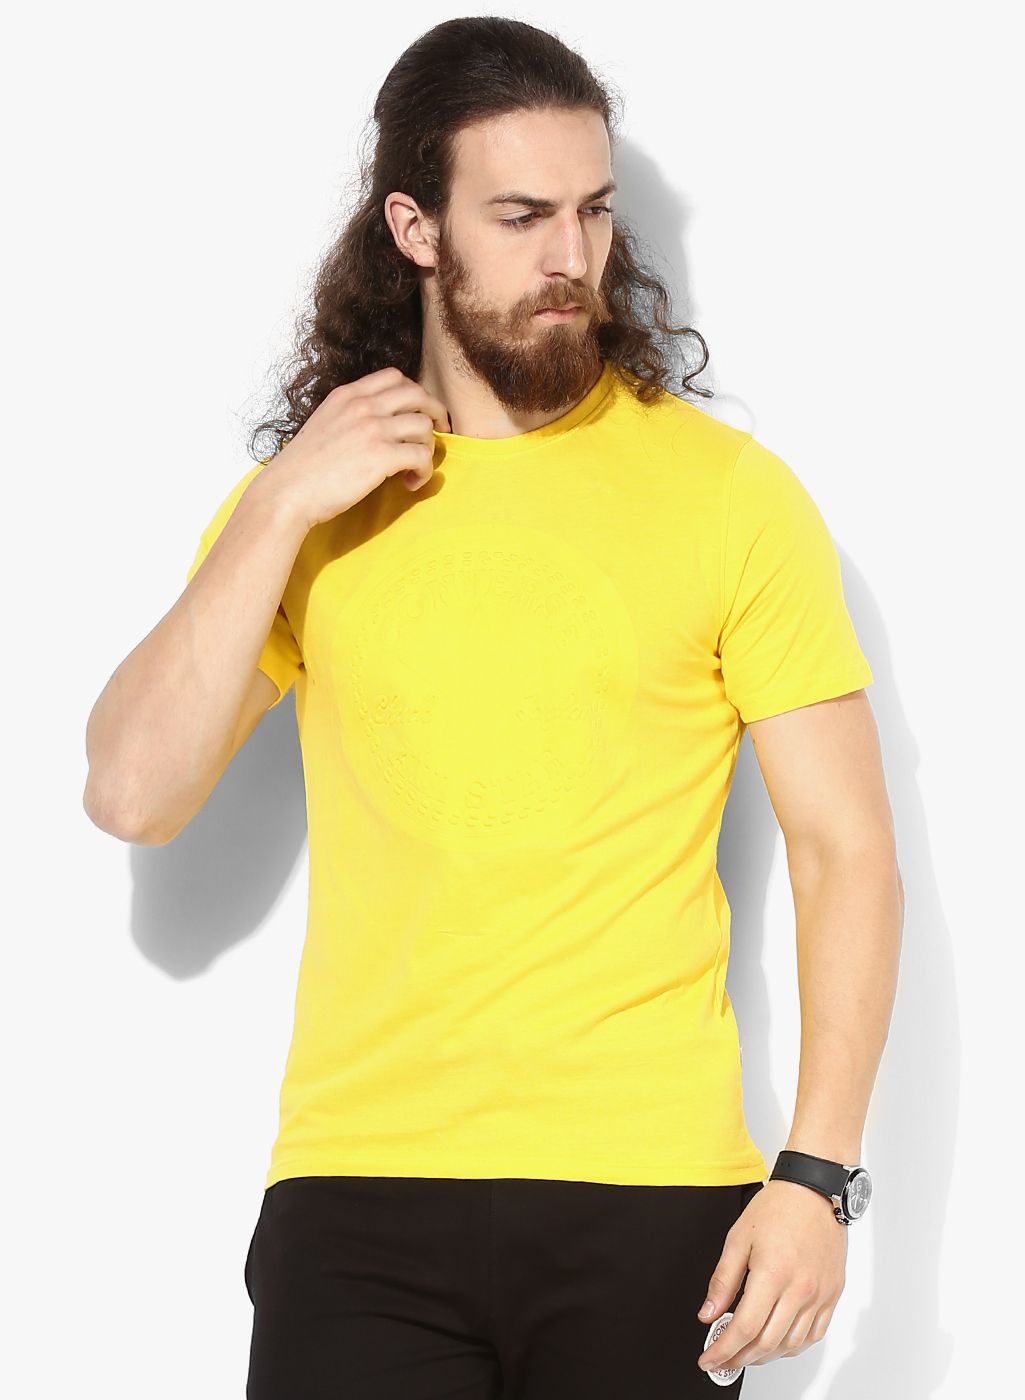 converse yellow t shirt